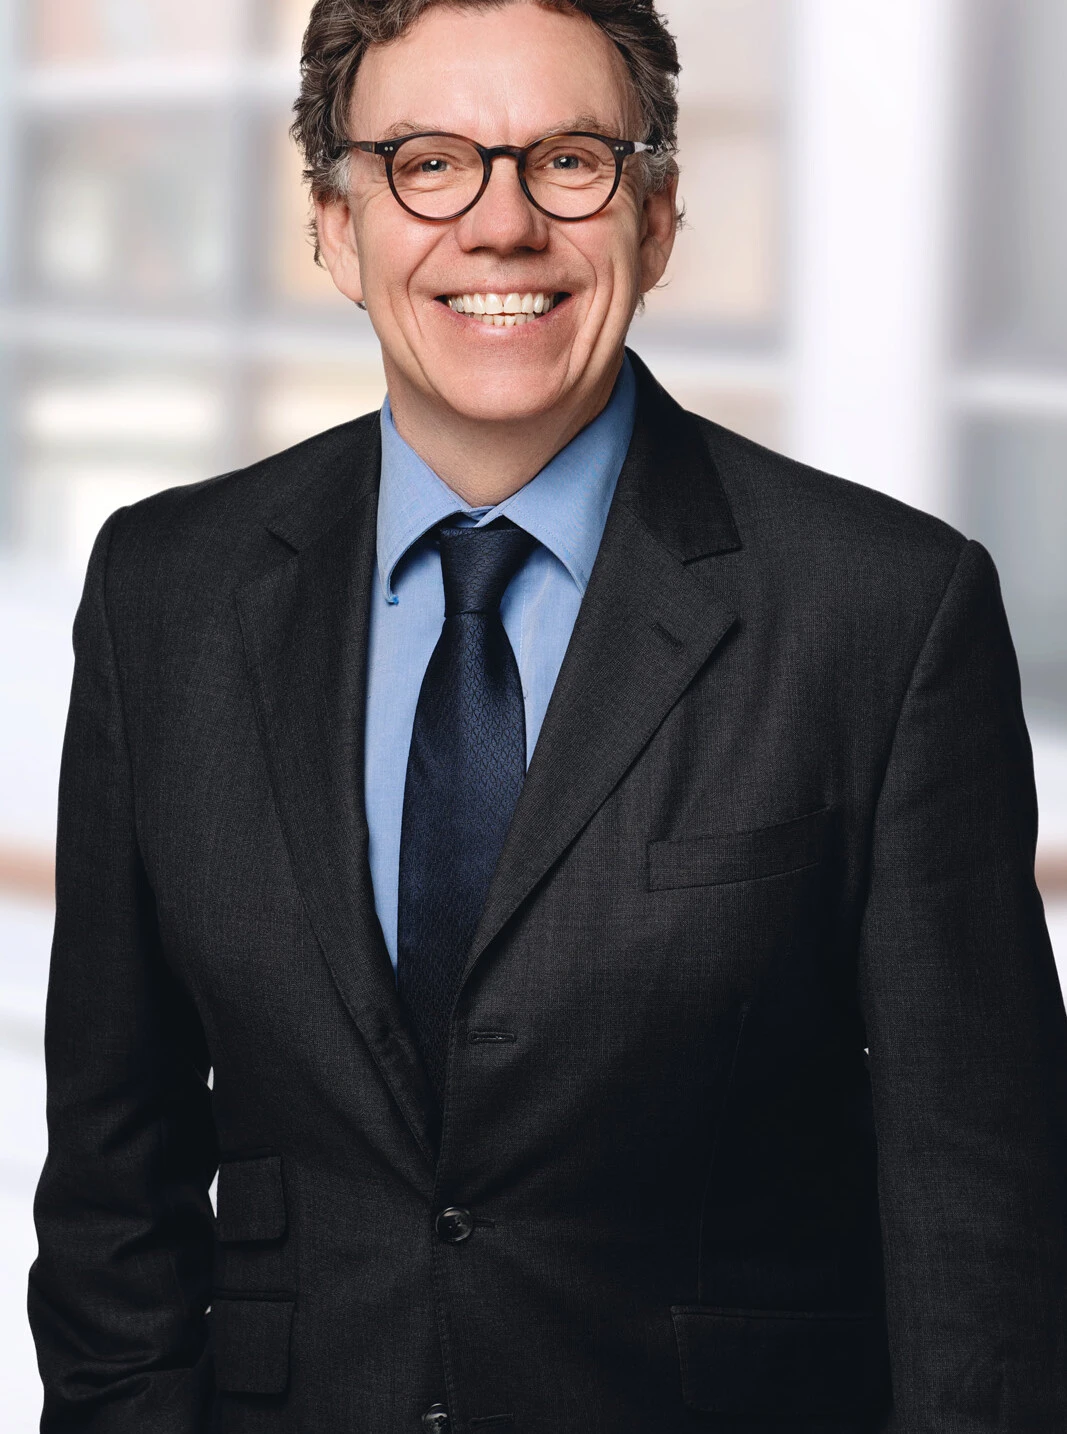 Roland Fuchs, Head of European Real Estate Finance at Allianz Real Estate